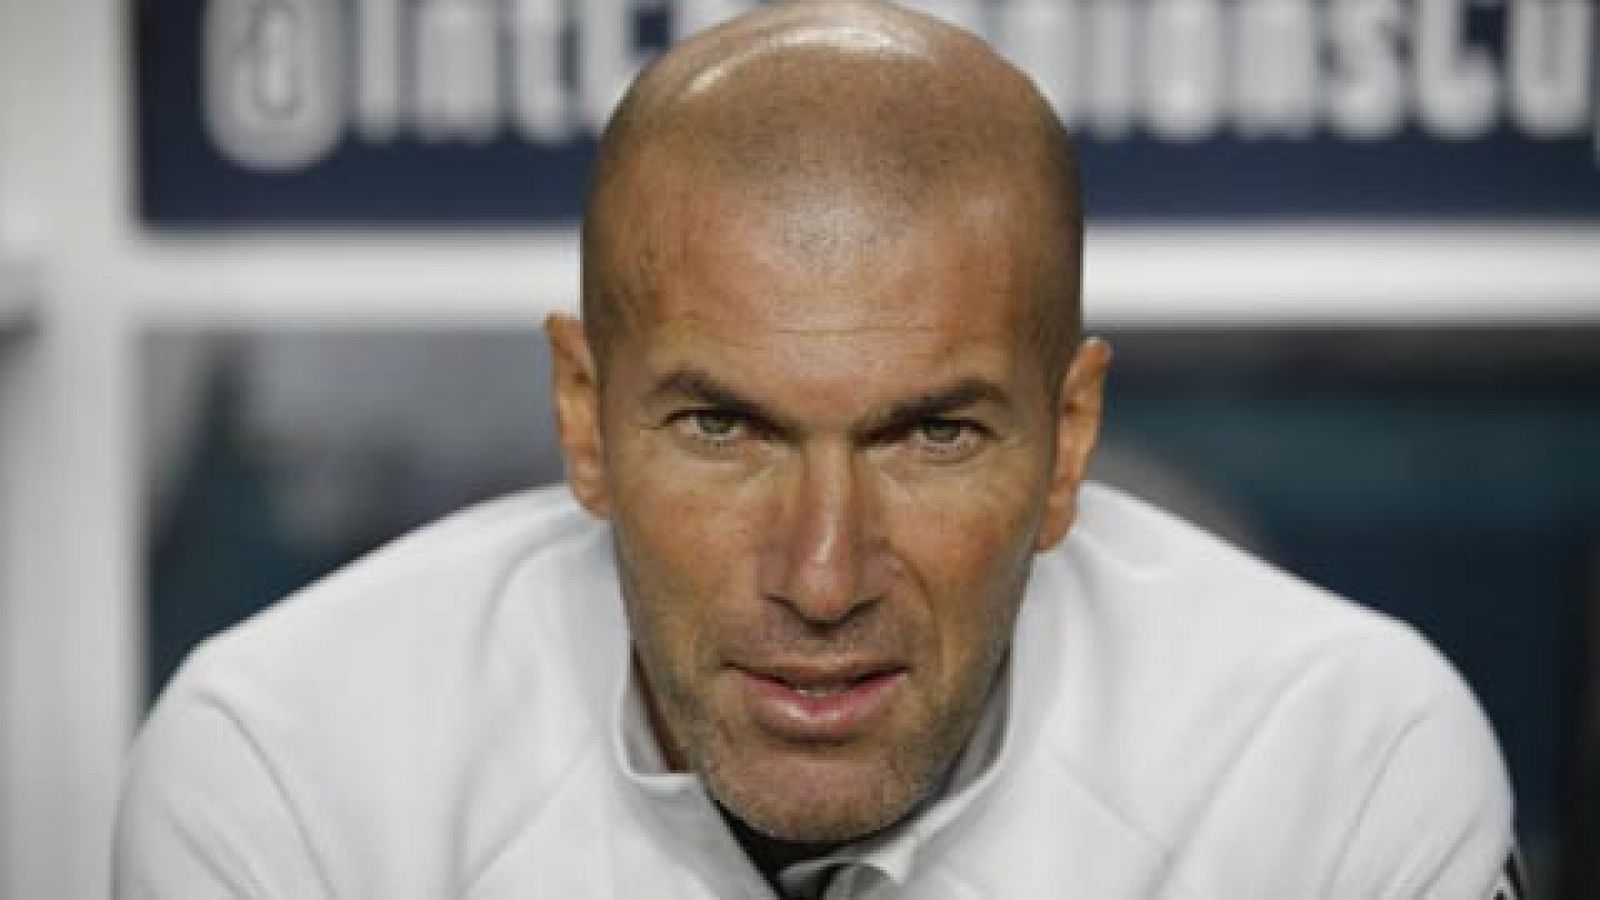 Telediario 1: Zidane, sobre el caso Cristiano: "Esperemos que se acabe este tema" | RTVE Play